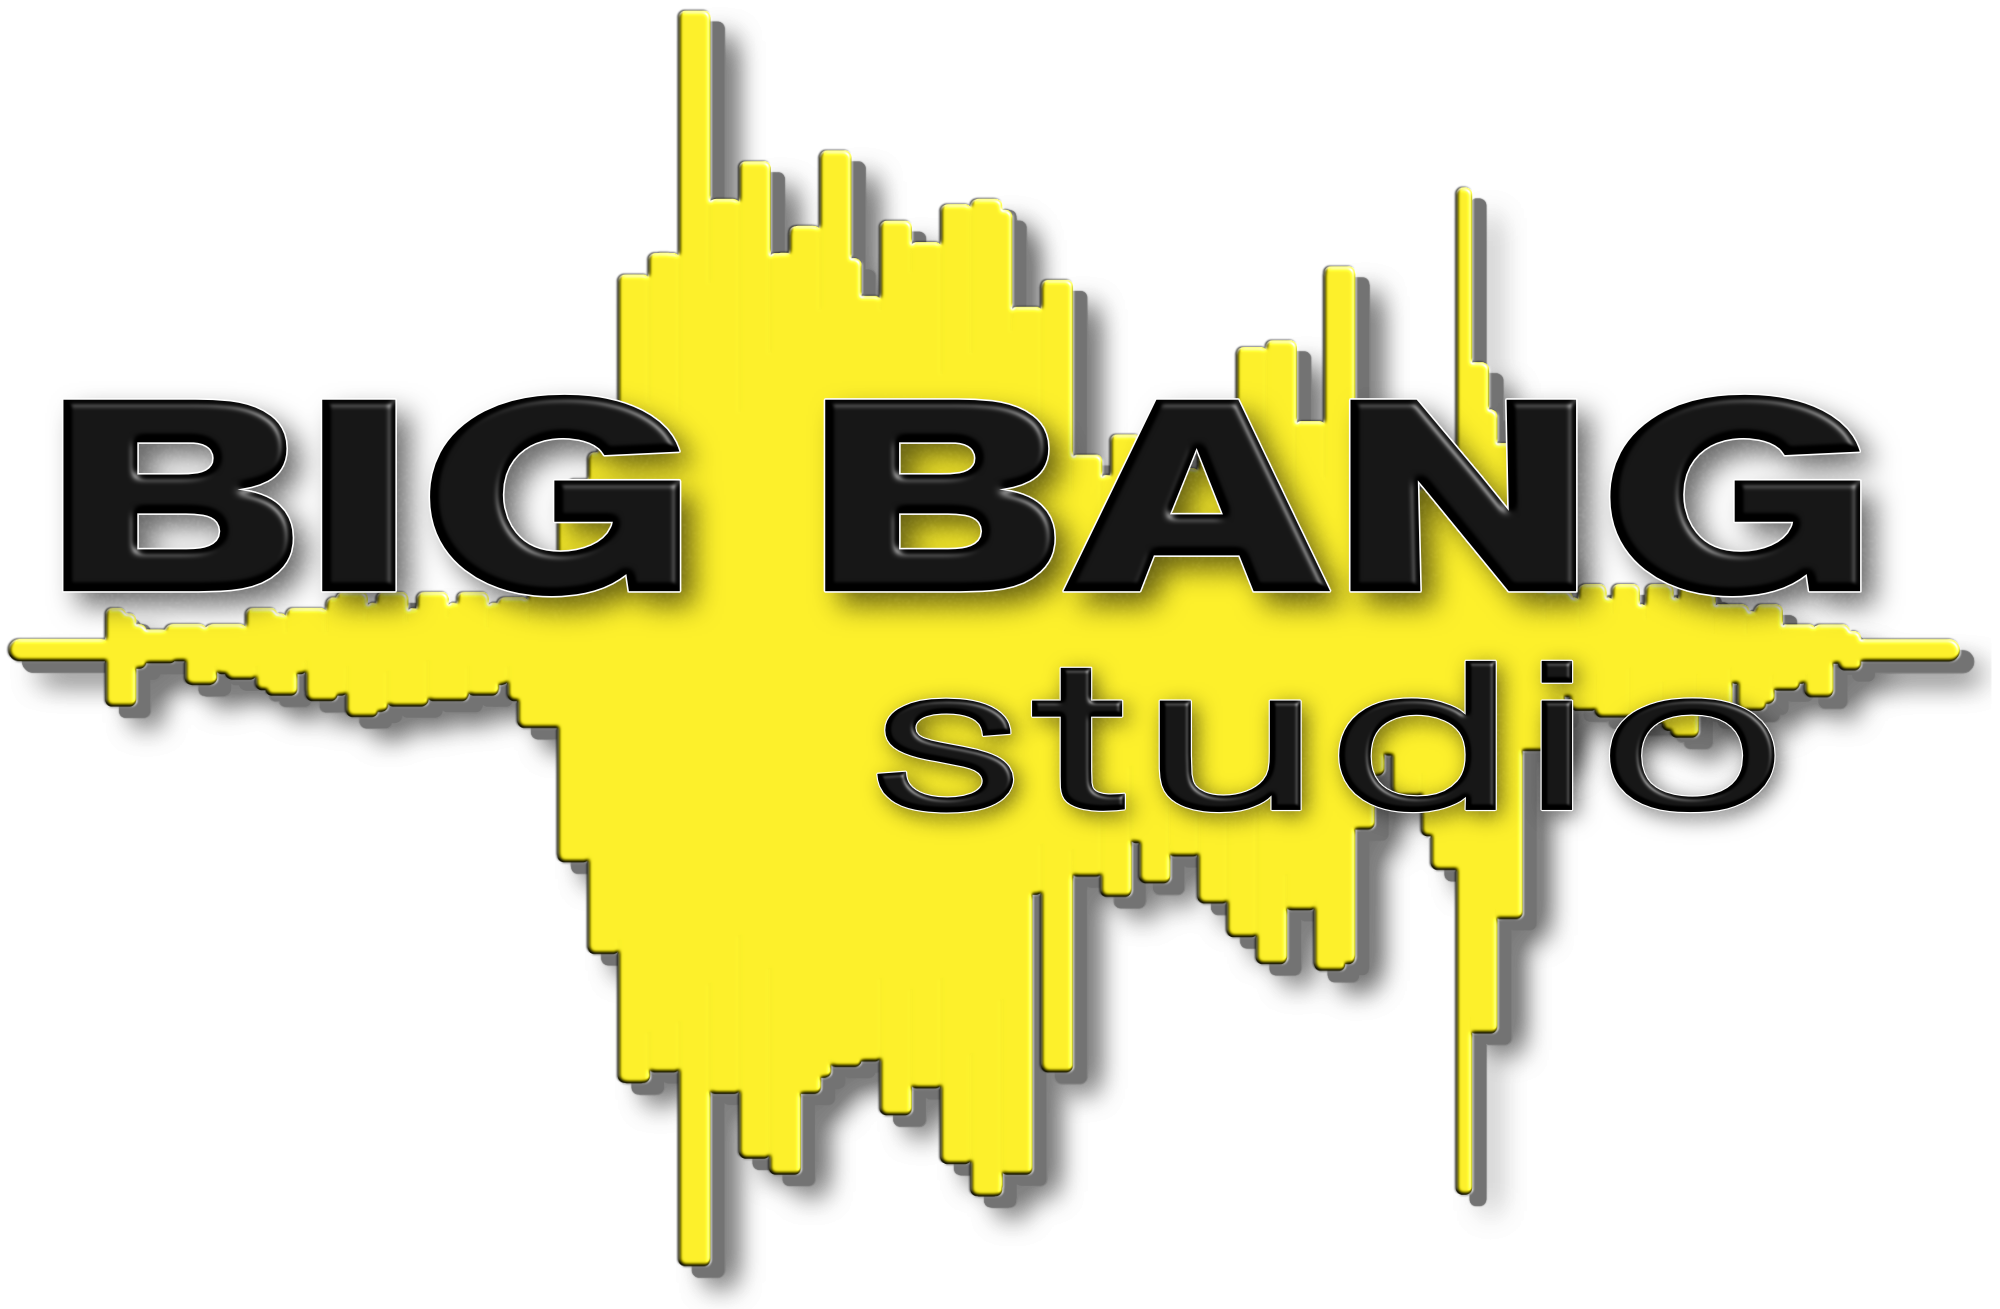 Peter Wespi‘s BIG BANG studio